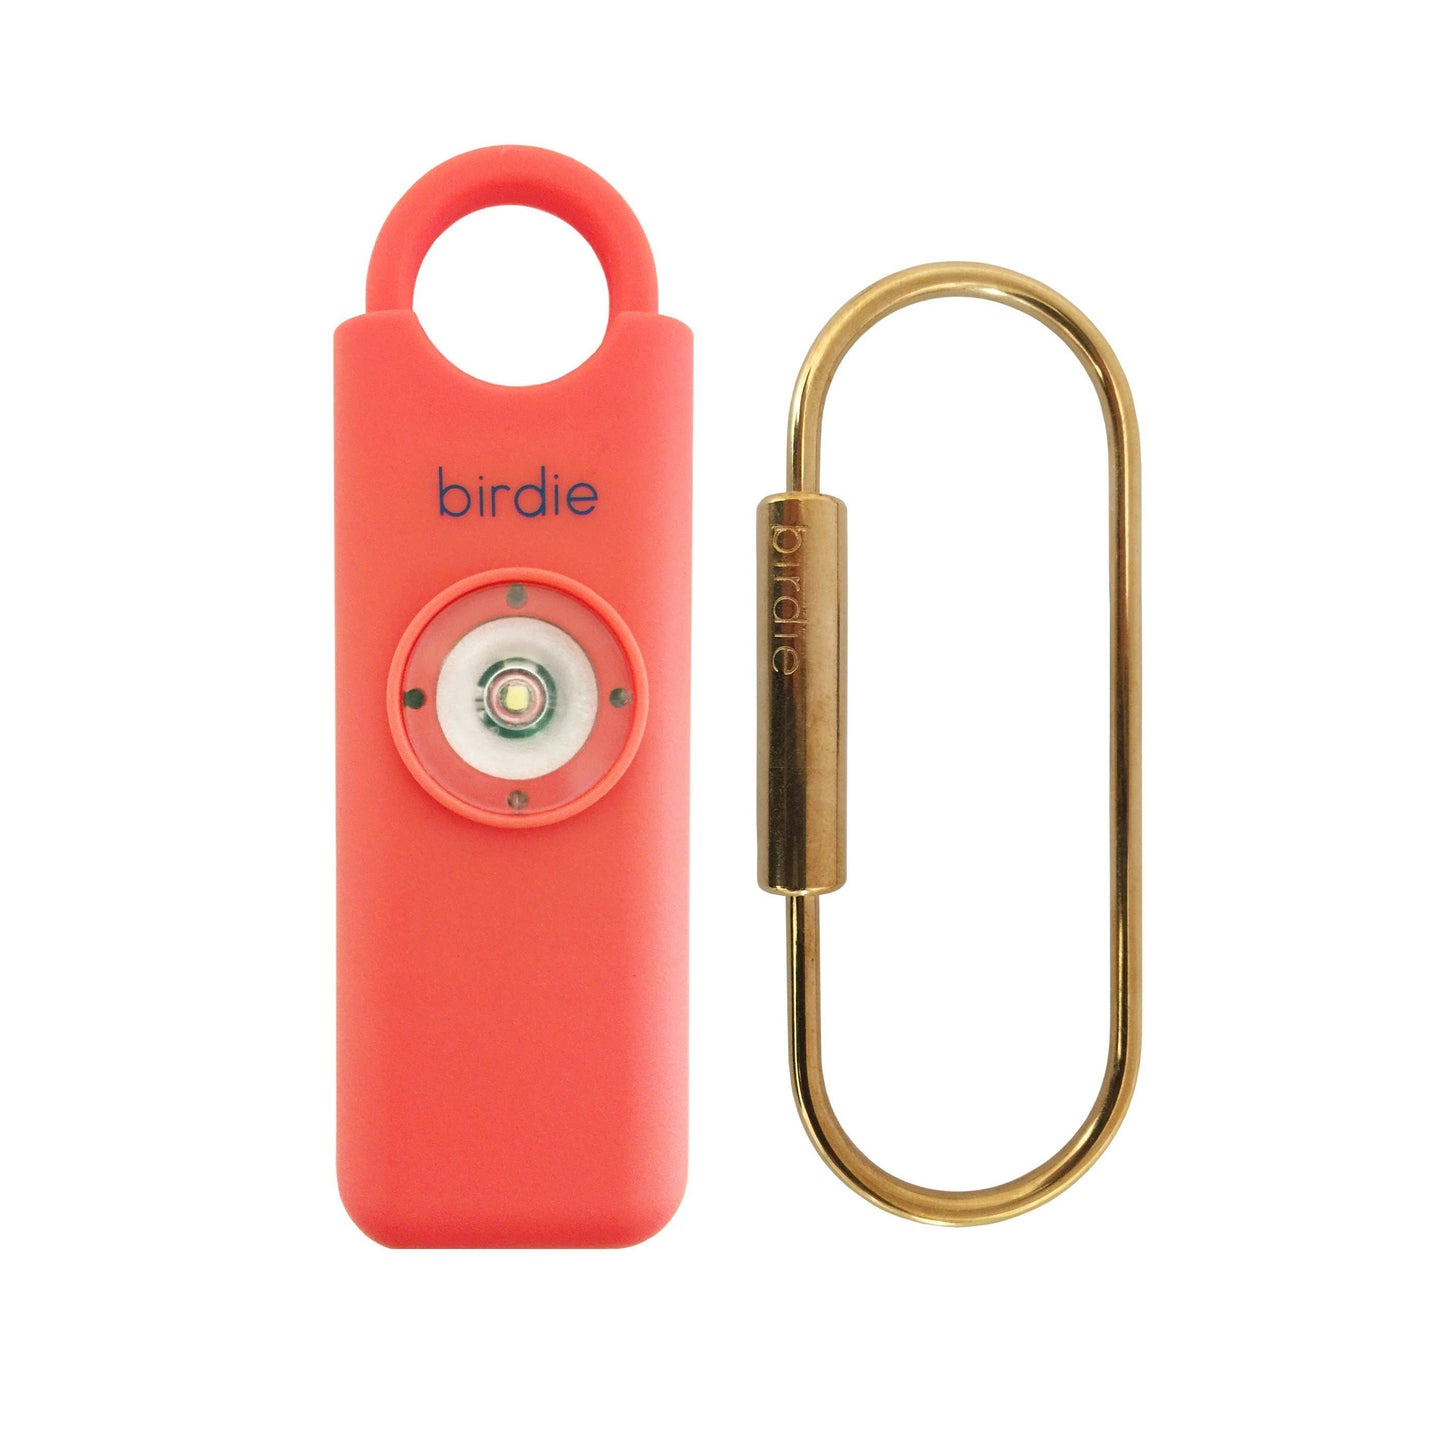 Birdie: She's Birdie Personal Safety Alarm